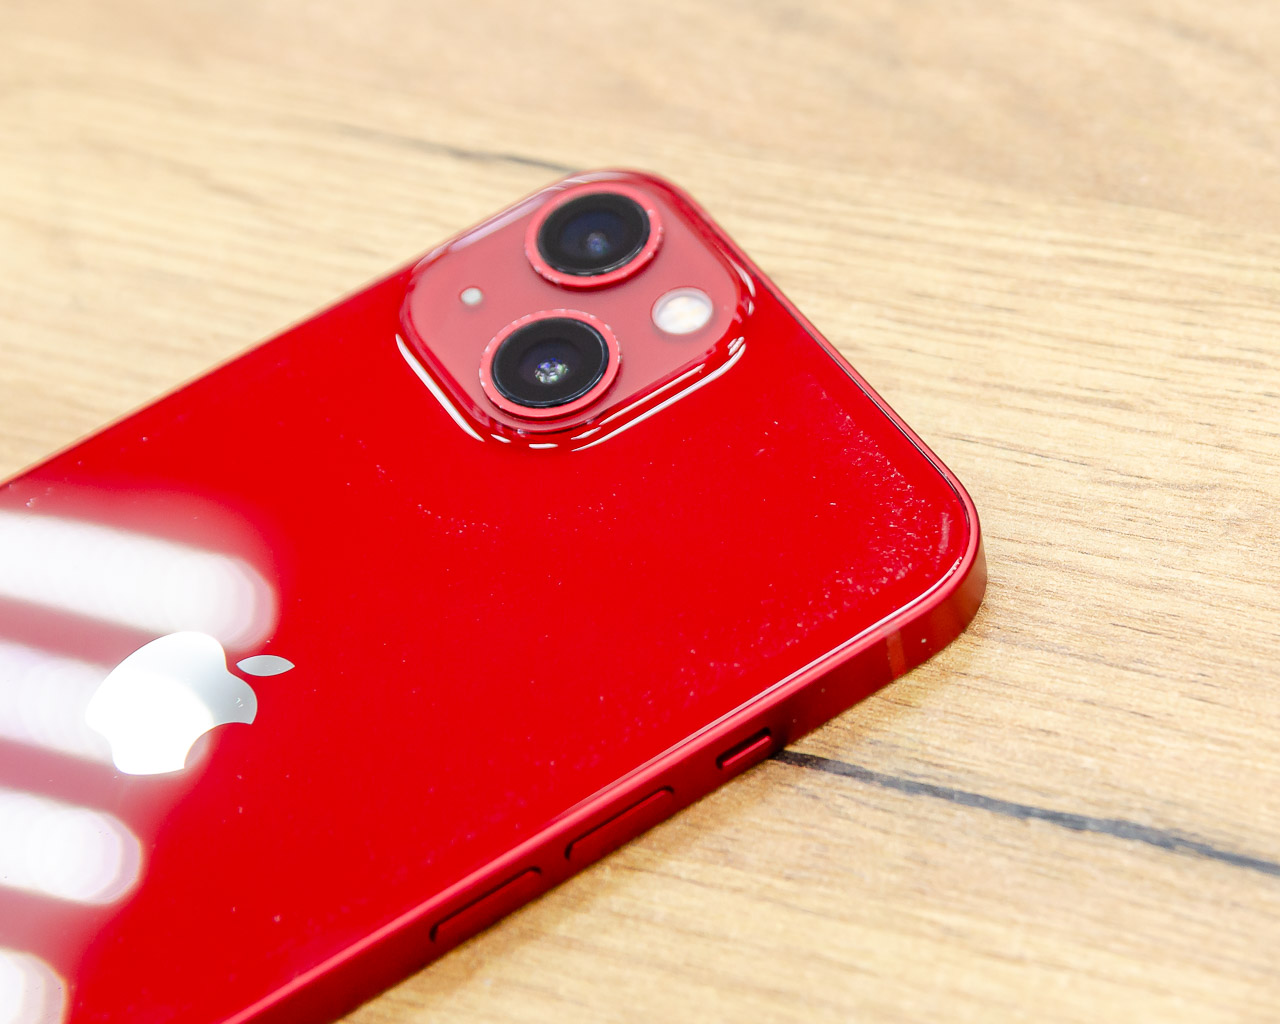 Смартфон Apple iPhone 13 128GB (красный)